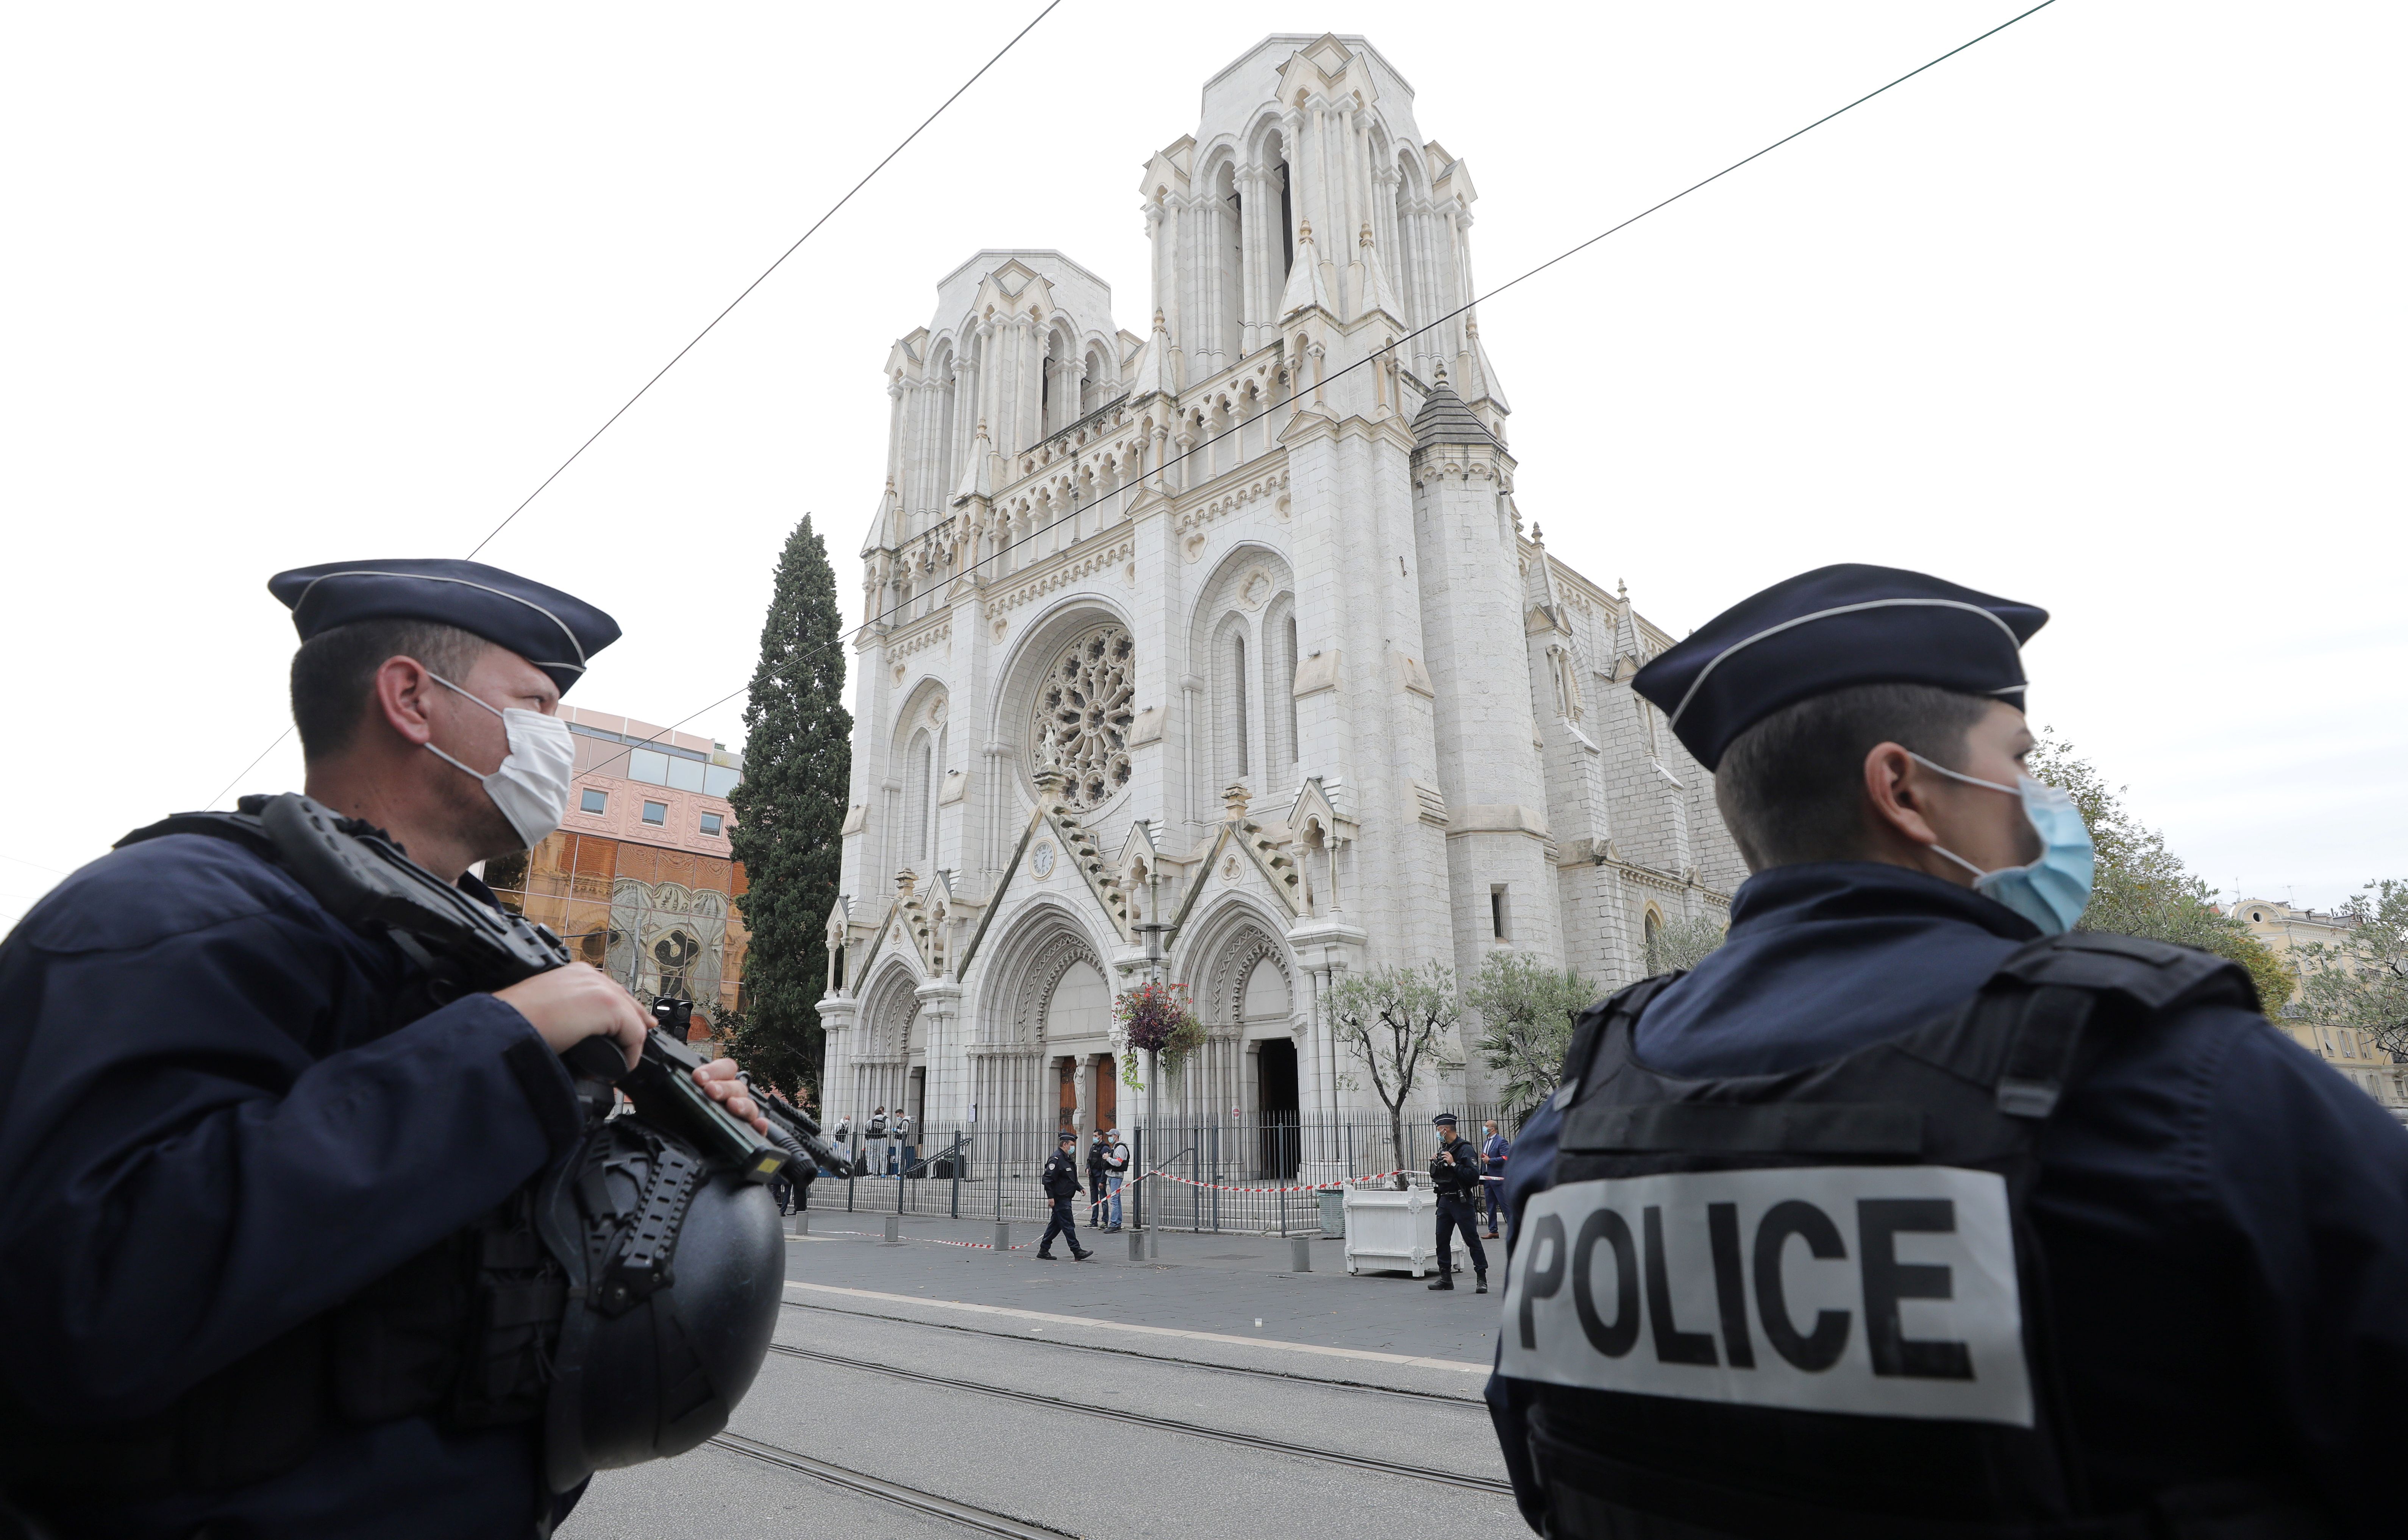 Reuters-ฆ่าตัดคอแทงคนตายกลางโบสถ์เมืองนีซของฝรั่งเศส ก่อการร้าย